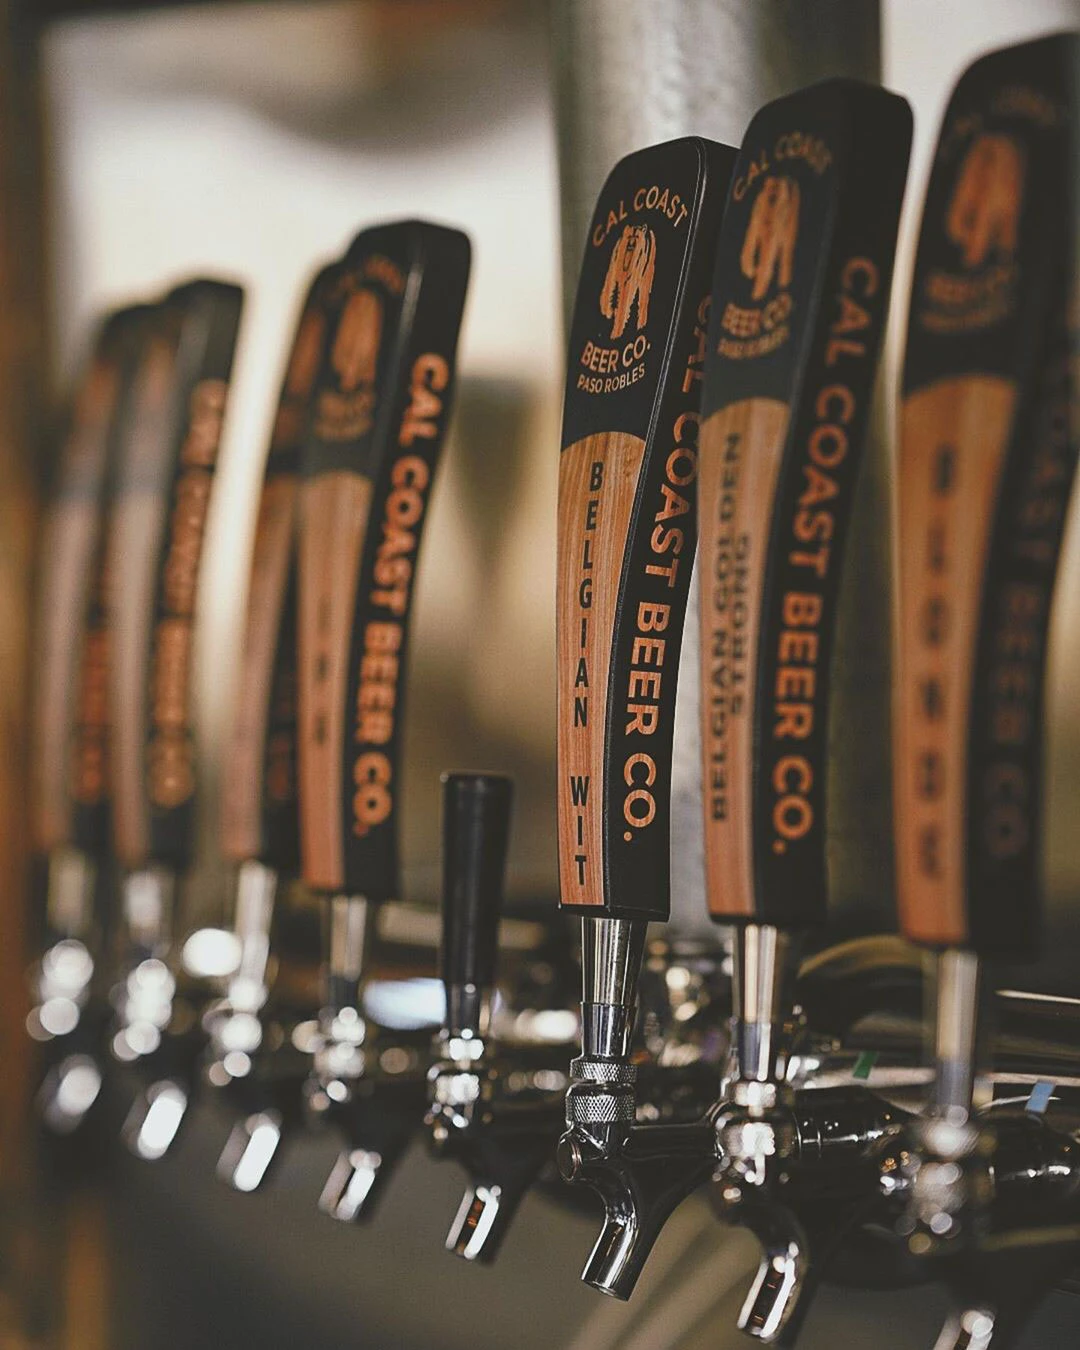 California Coast Beer Co. tap handles